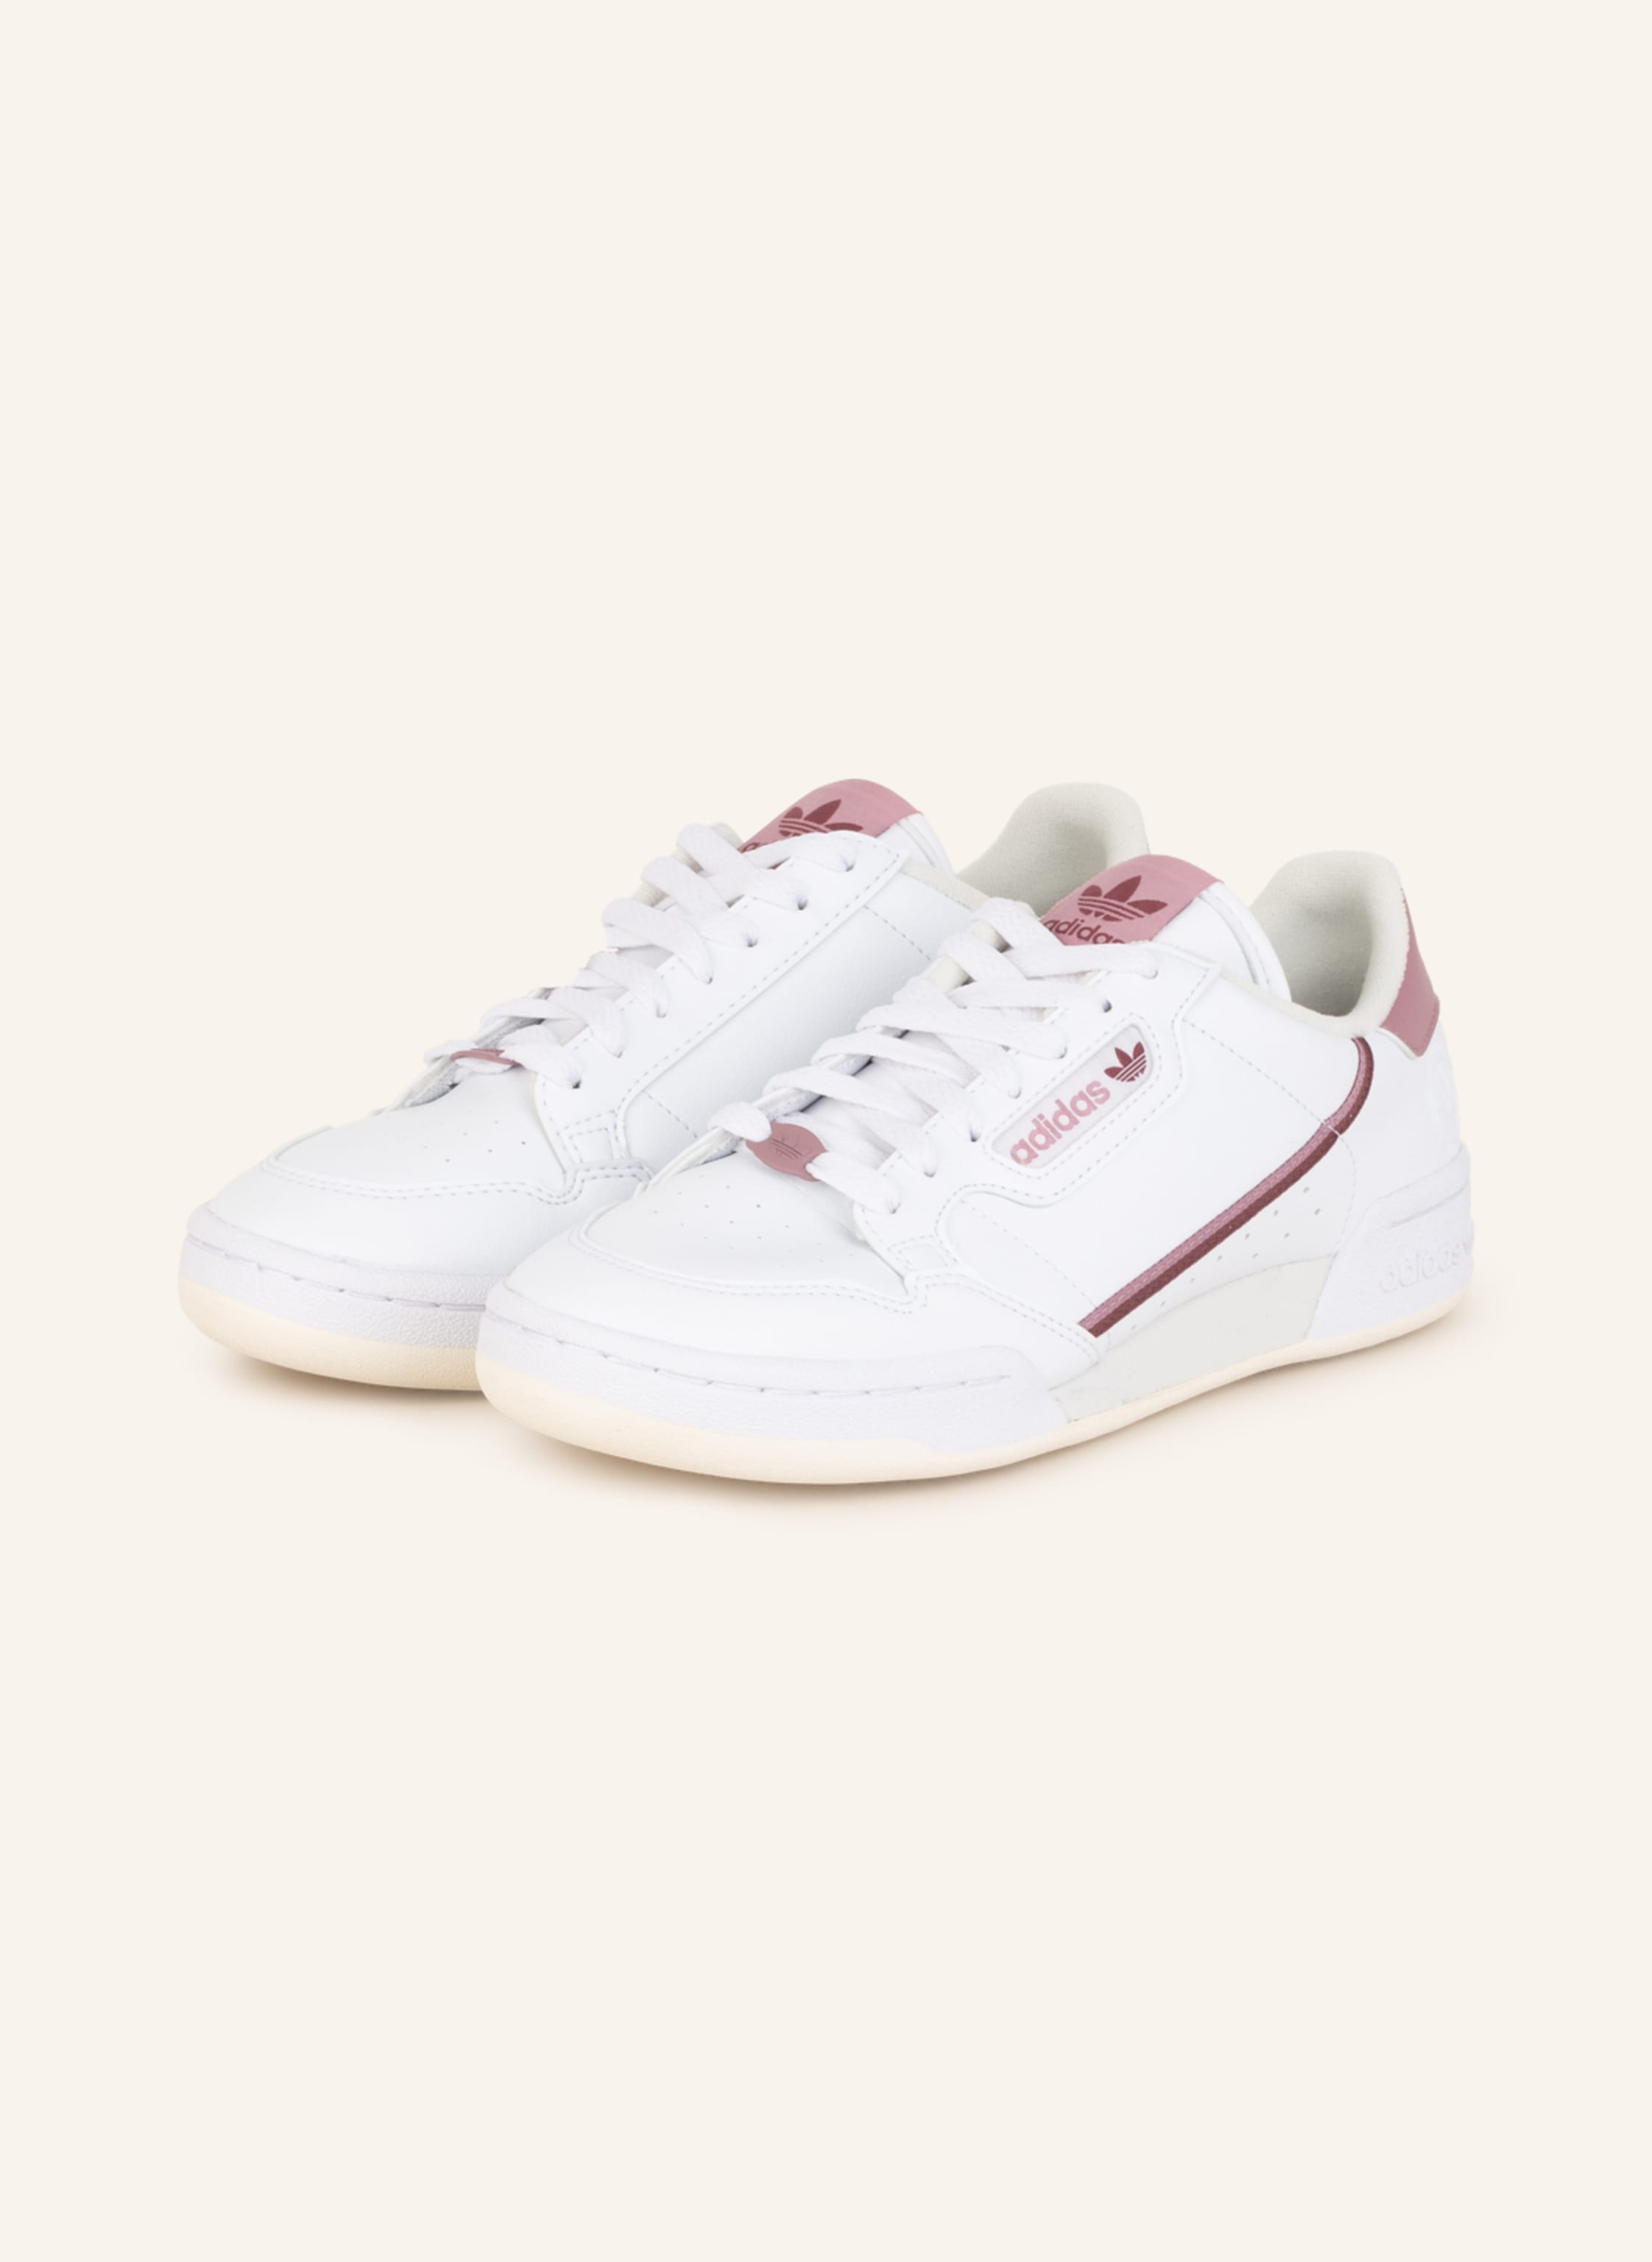 excitation live kitchen adidas Originals Sneakers CONTINENTAL 80 VEGAN in white/ dusky pink - Buy  Online! | Breuninger